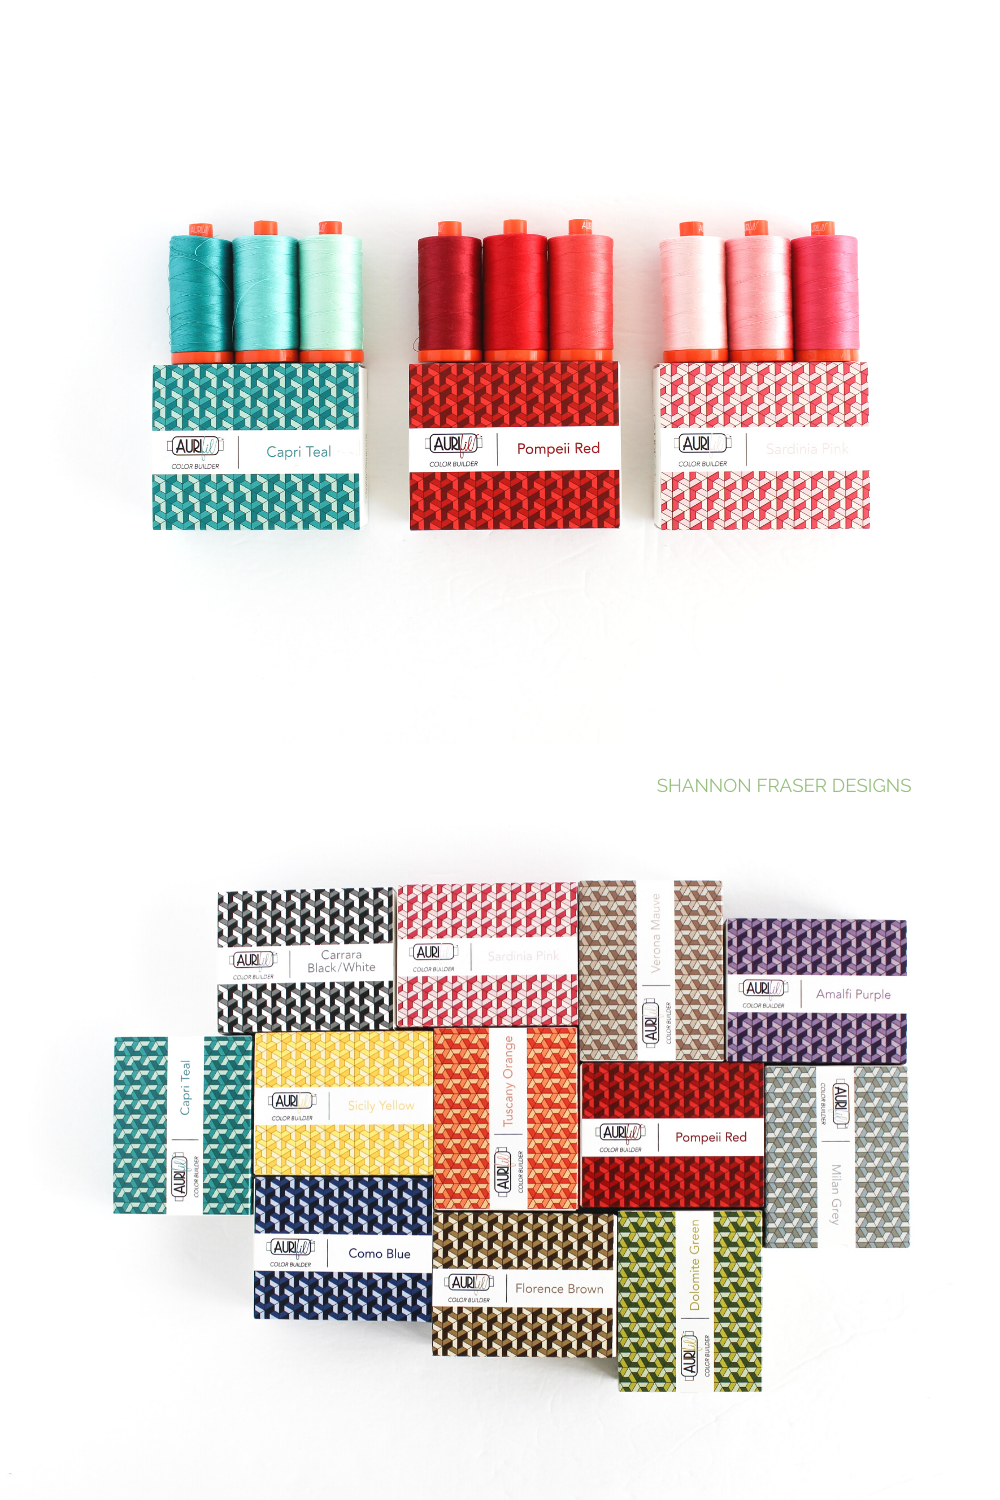 Aurifil Thread Color Builder Series | Shannon Fraser Designs #quiltingthread